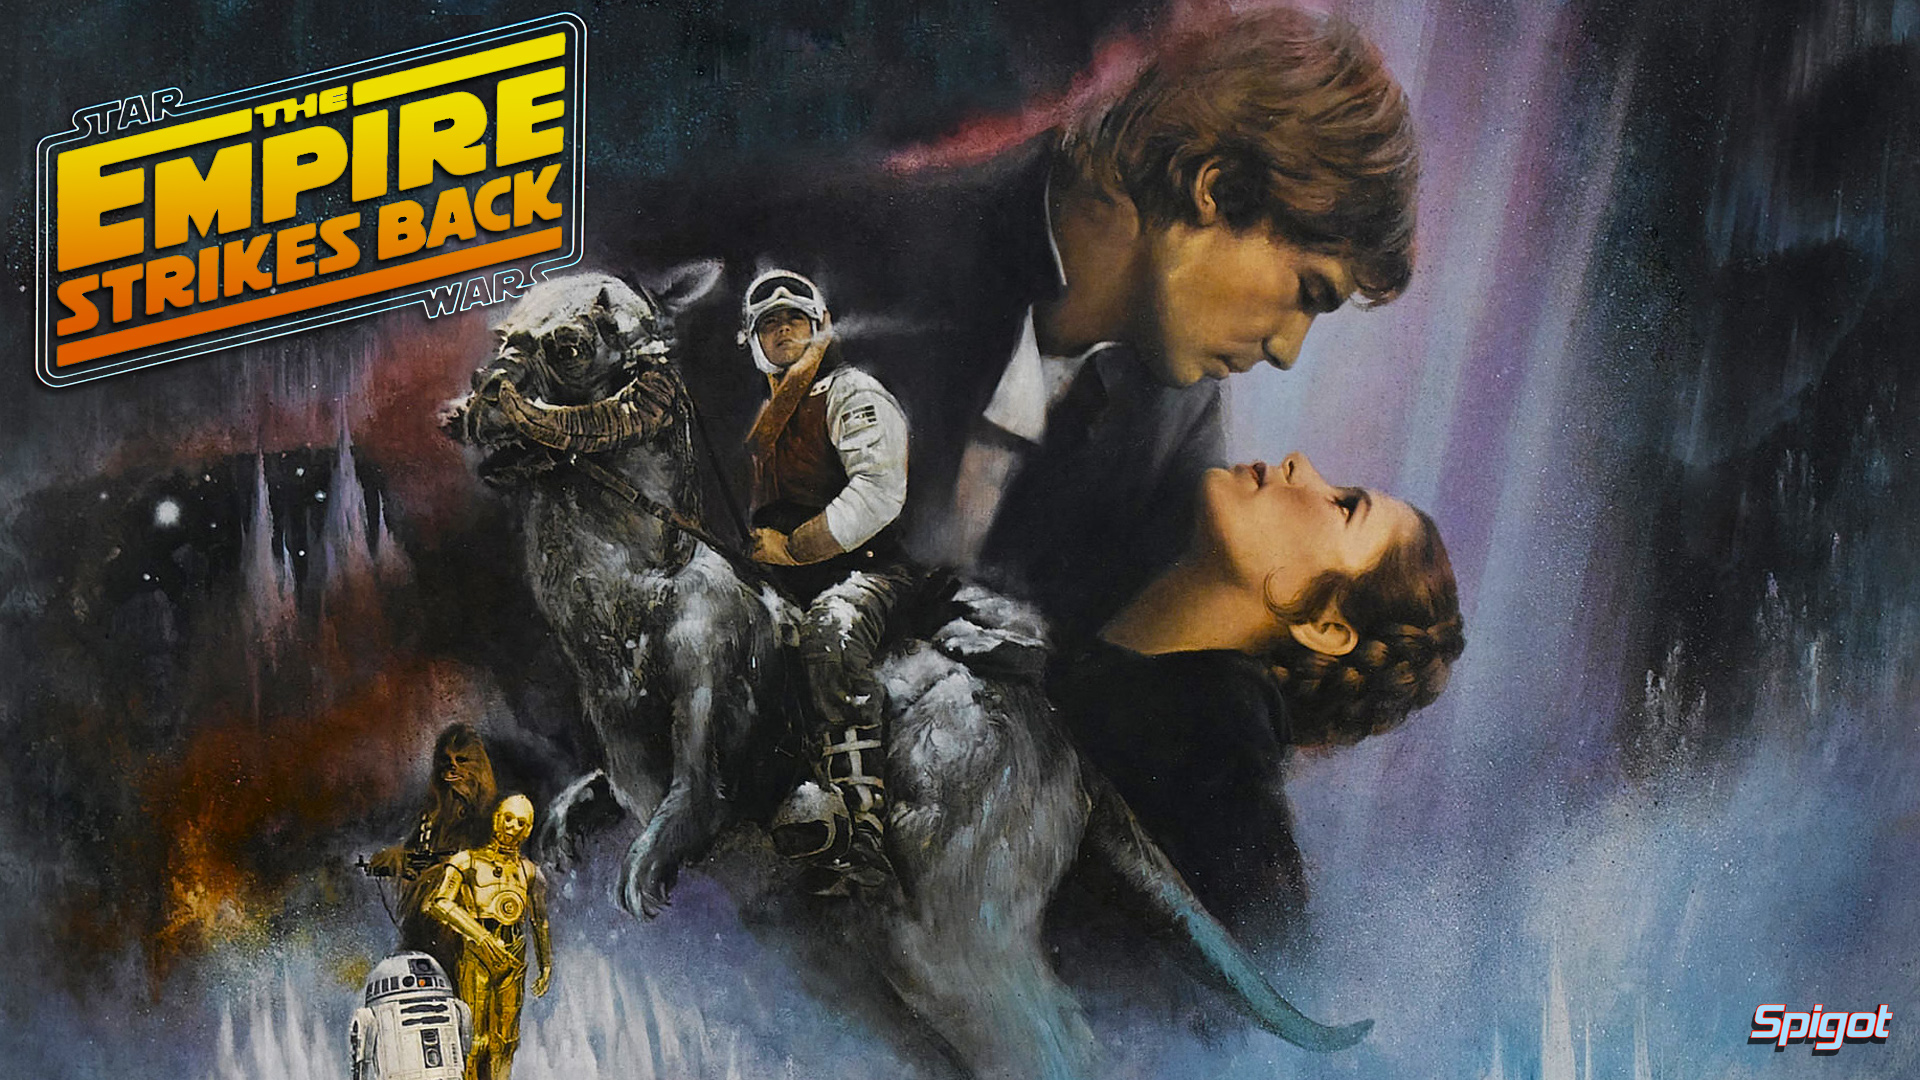 دانلود فیلم Star Wars: Episode V - The Empire Strikes Back 1980